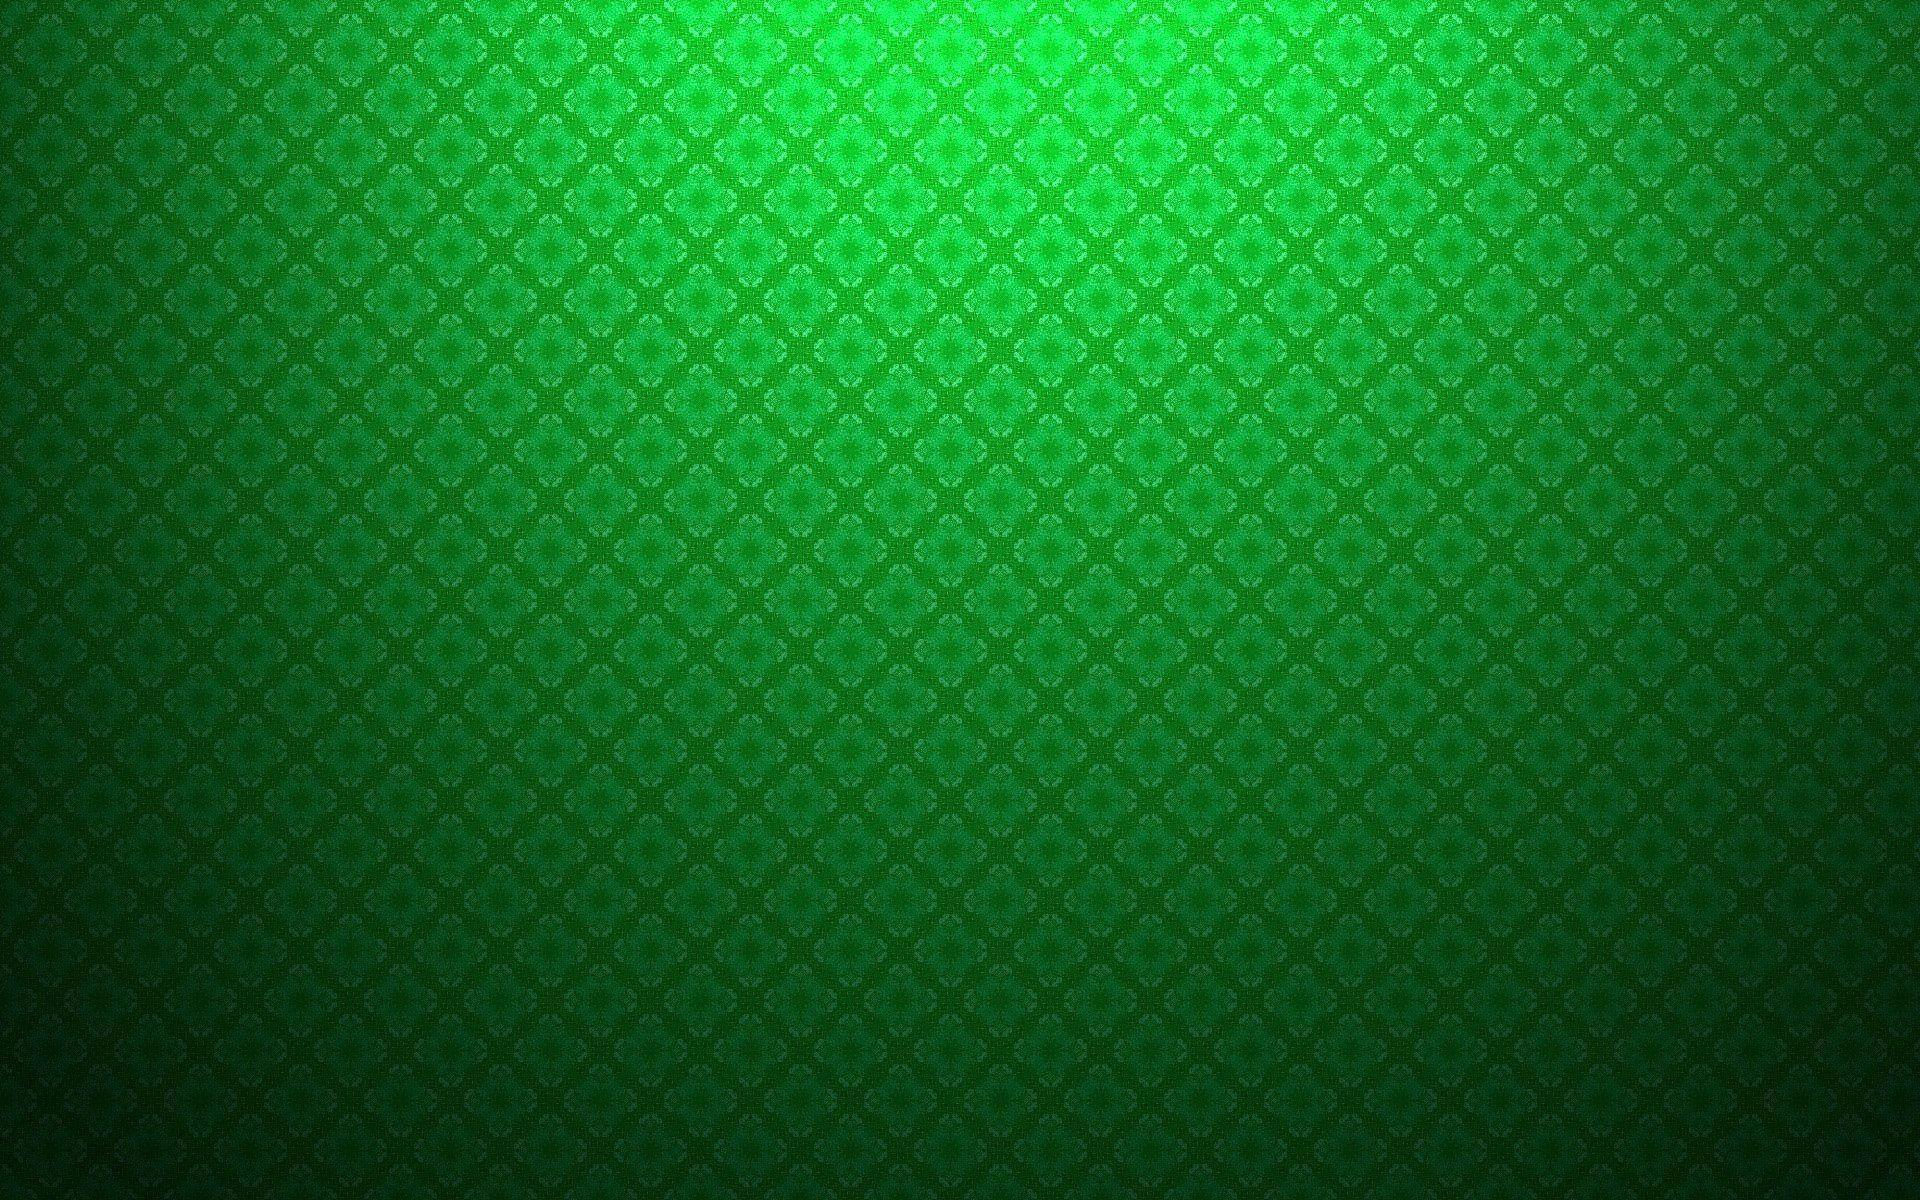 Green Background 9 193124 Image HD Wallpaper. Wallfoy.com